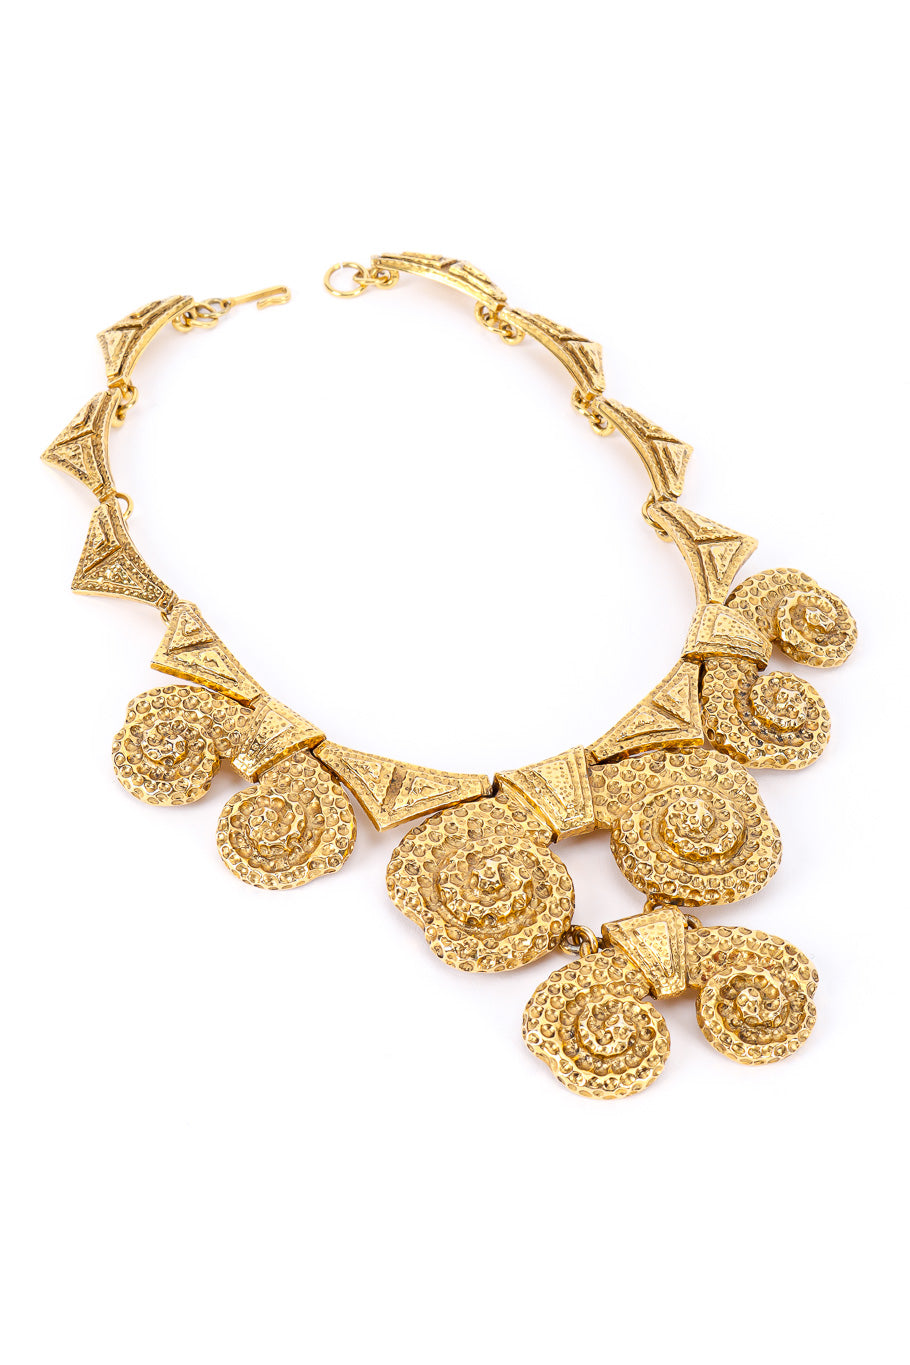 Vintage Pauline Rader Hammered Swirl Collar Necklace full view @Recessla